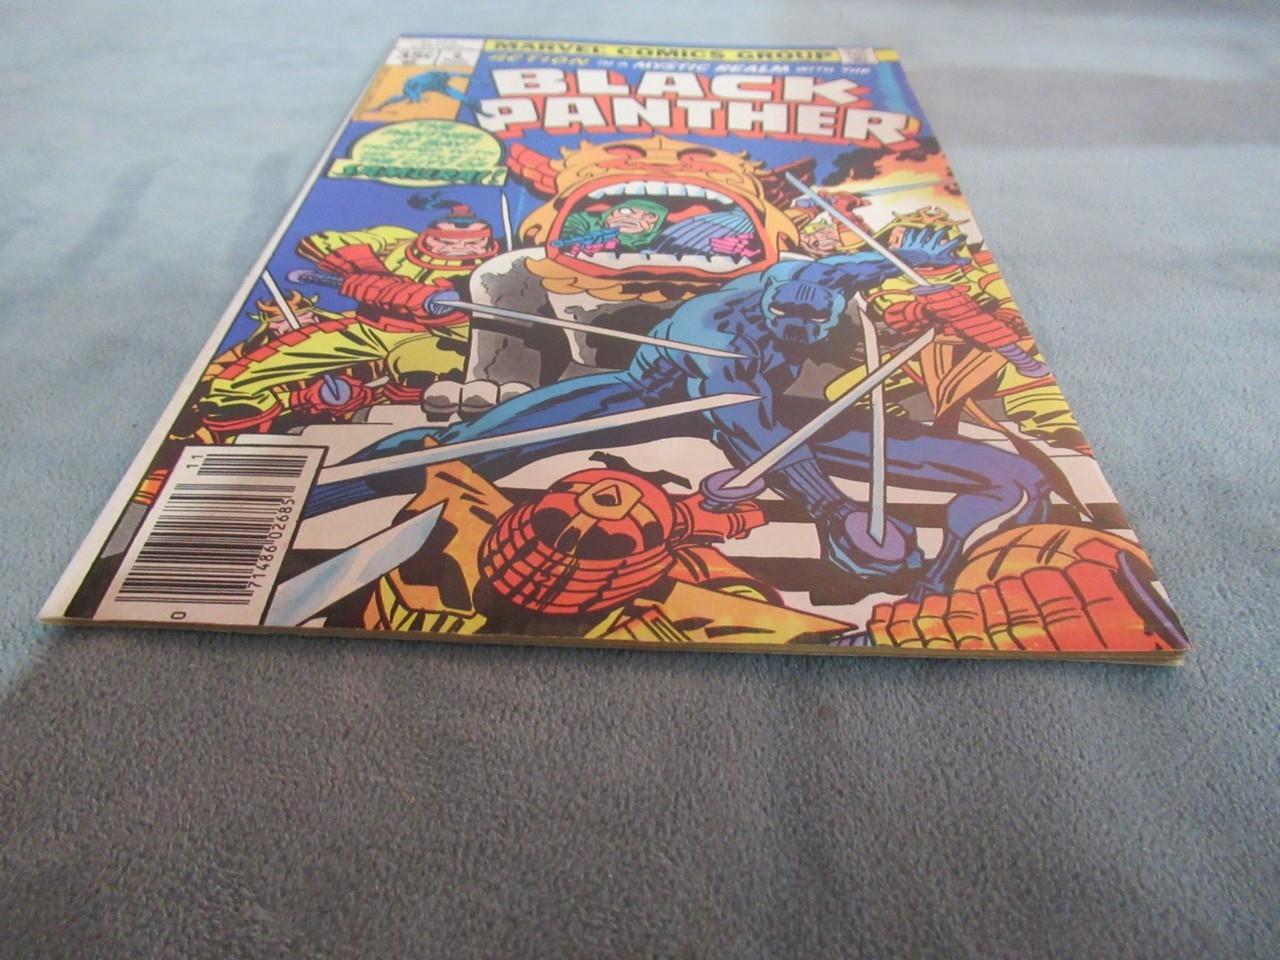 Black Panther #6 (1977 Series)/Semi-Key